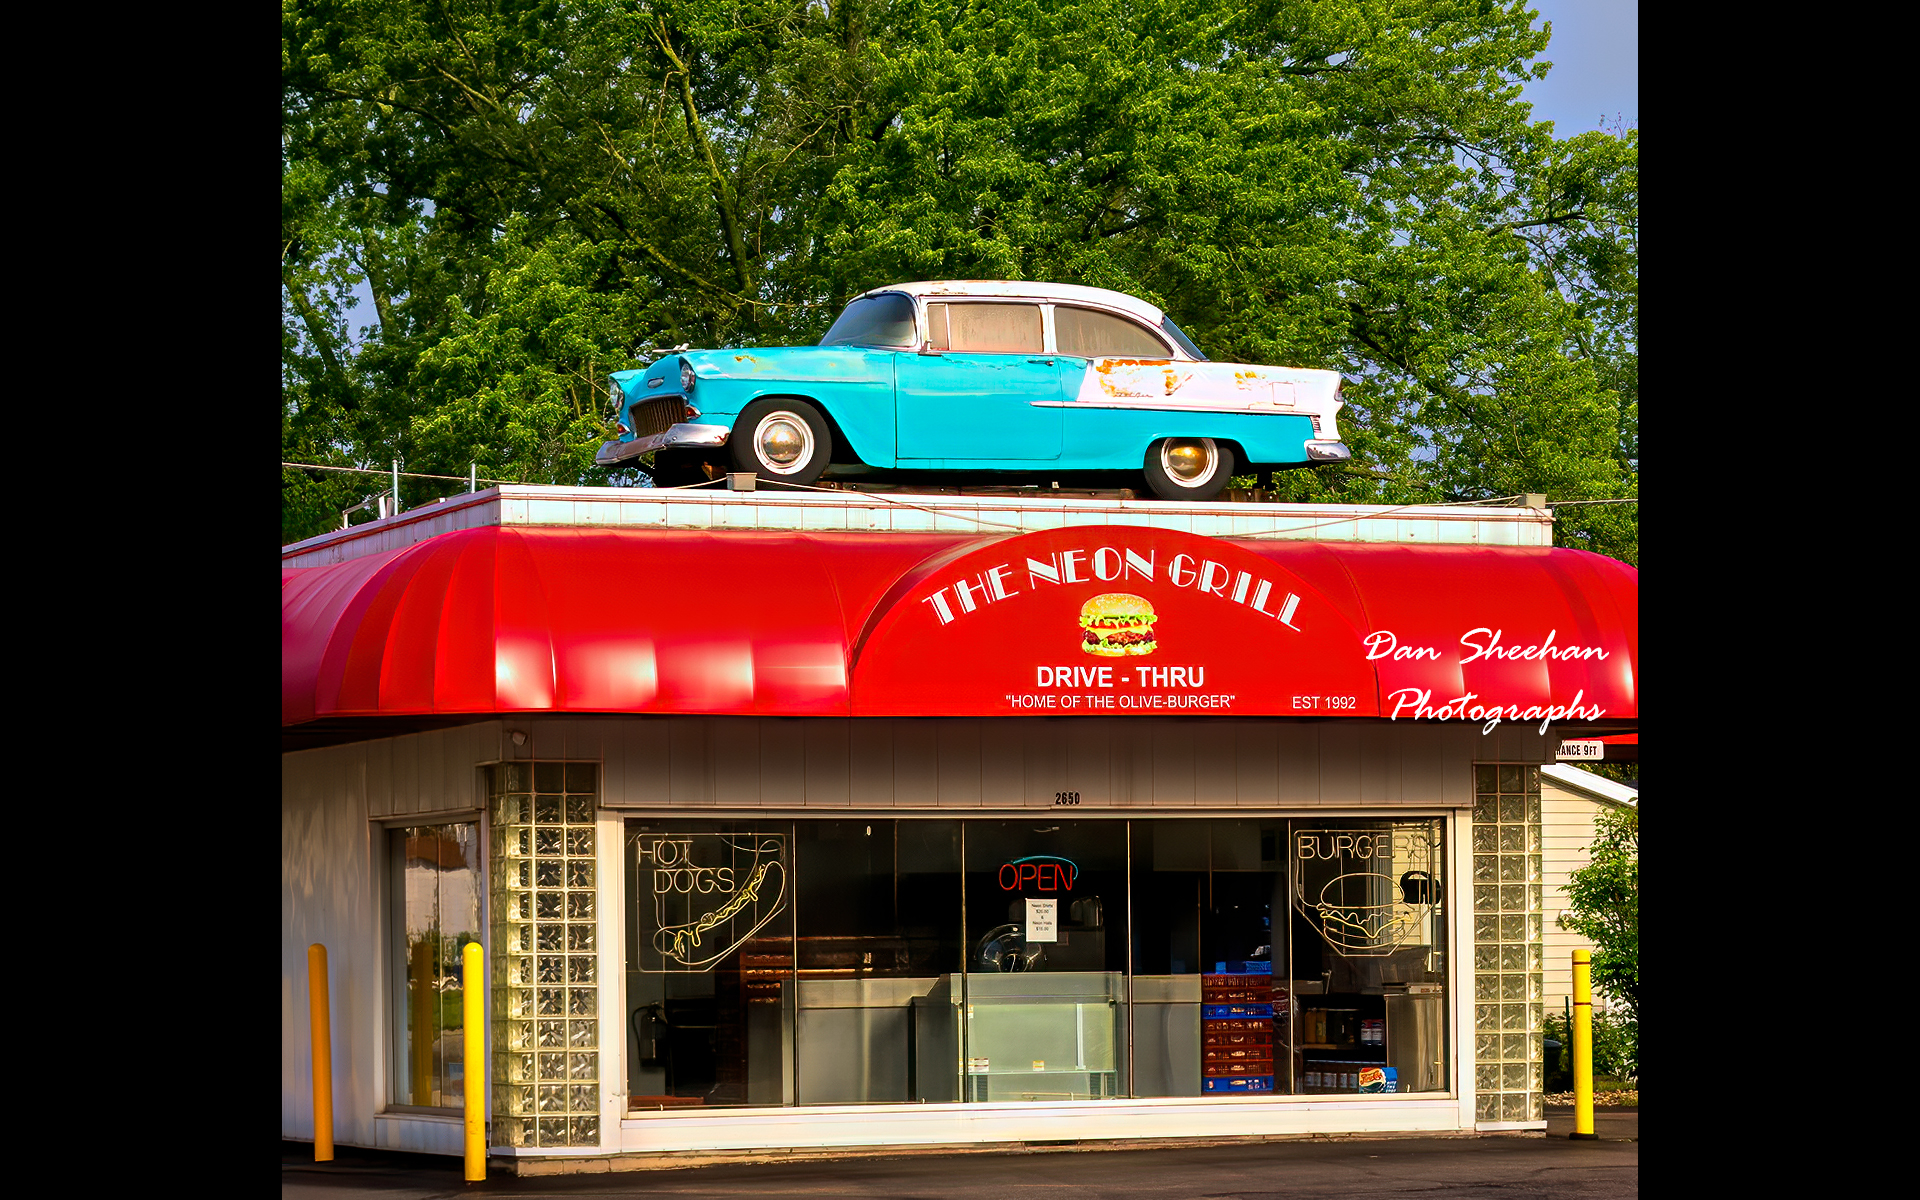 The Neon Grill in St. Joseph, Michigan. Flyin' 55 on top. : Cars : Dan Sheehan Photographs - Fine Art Stock Photography